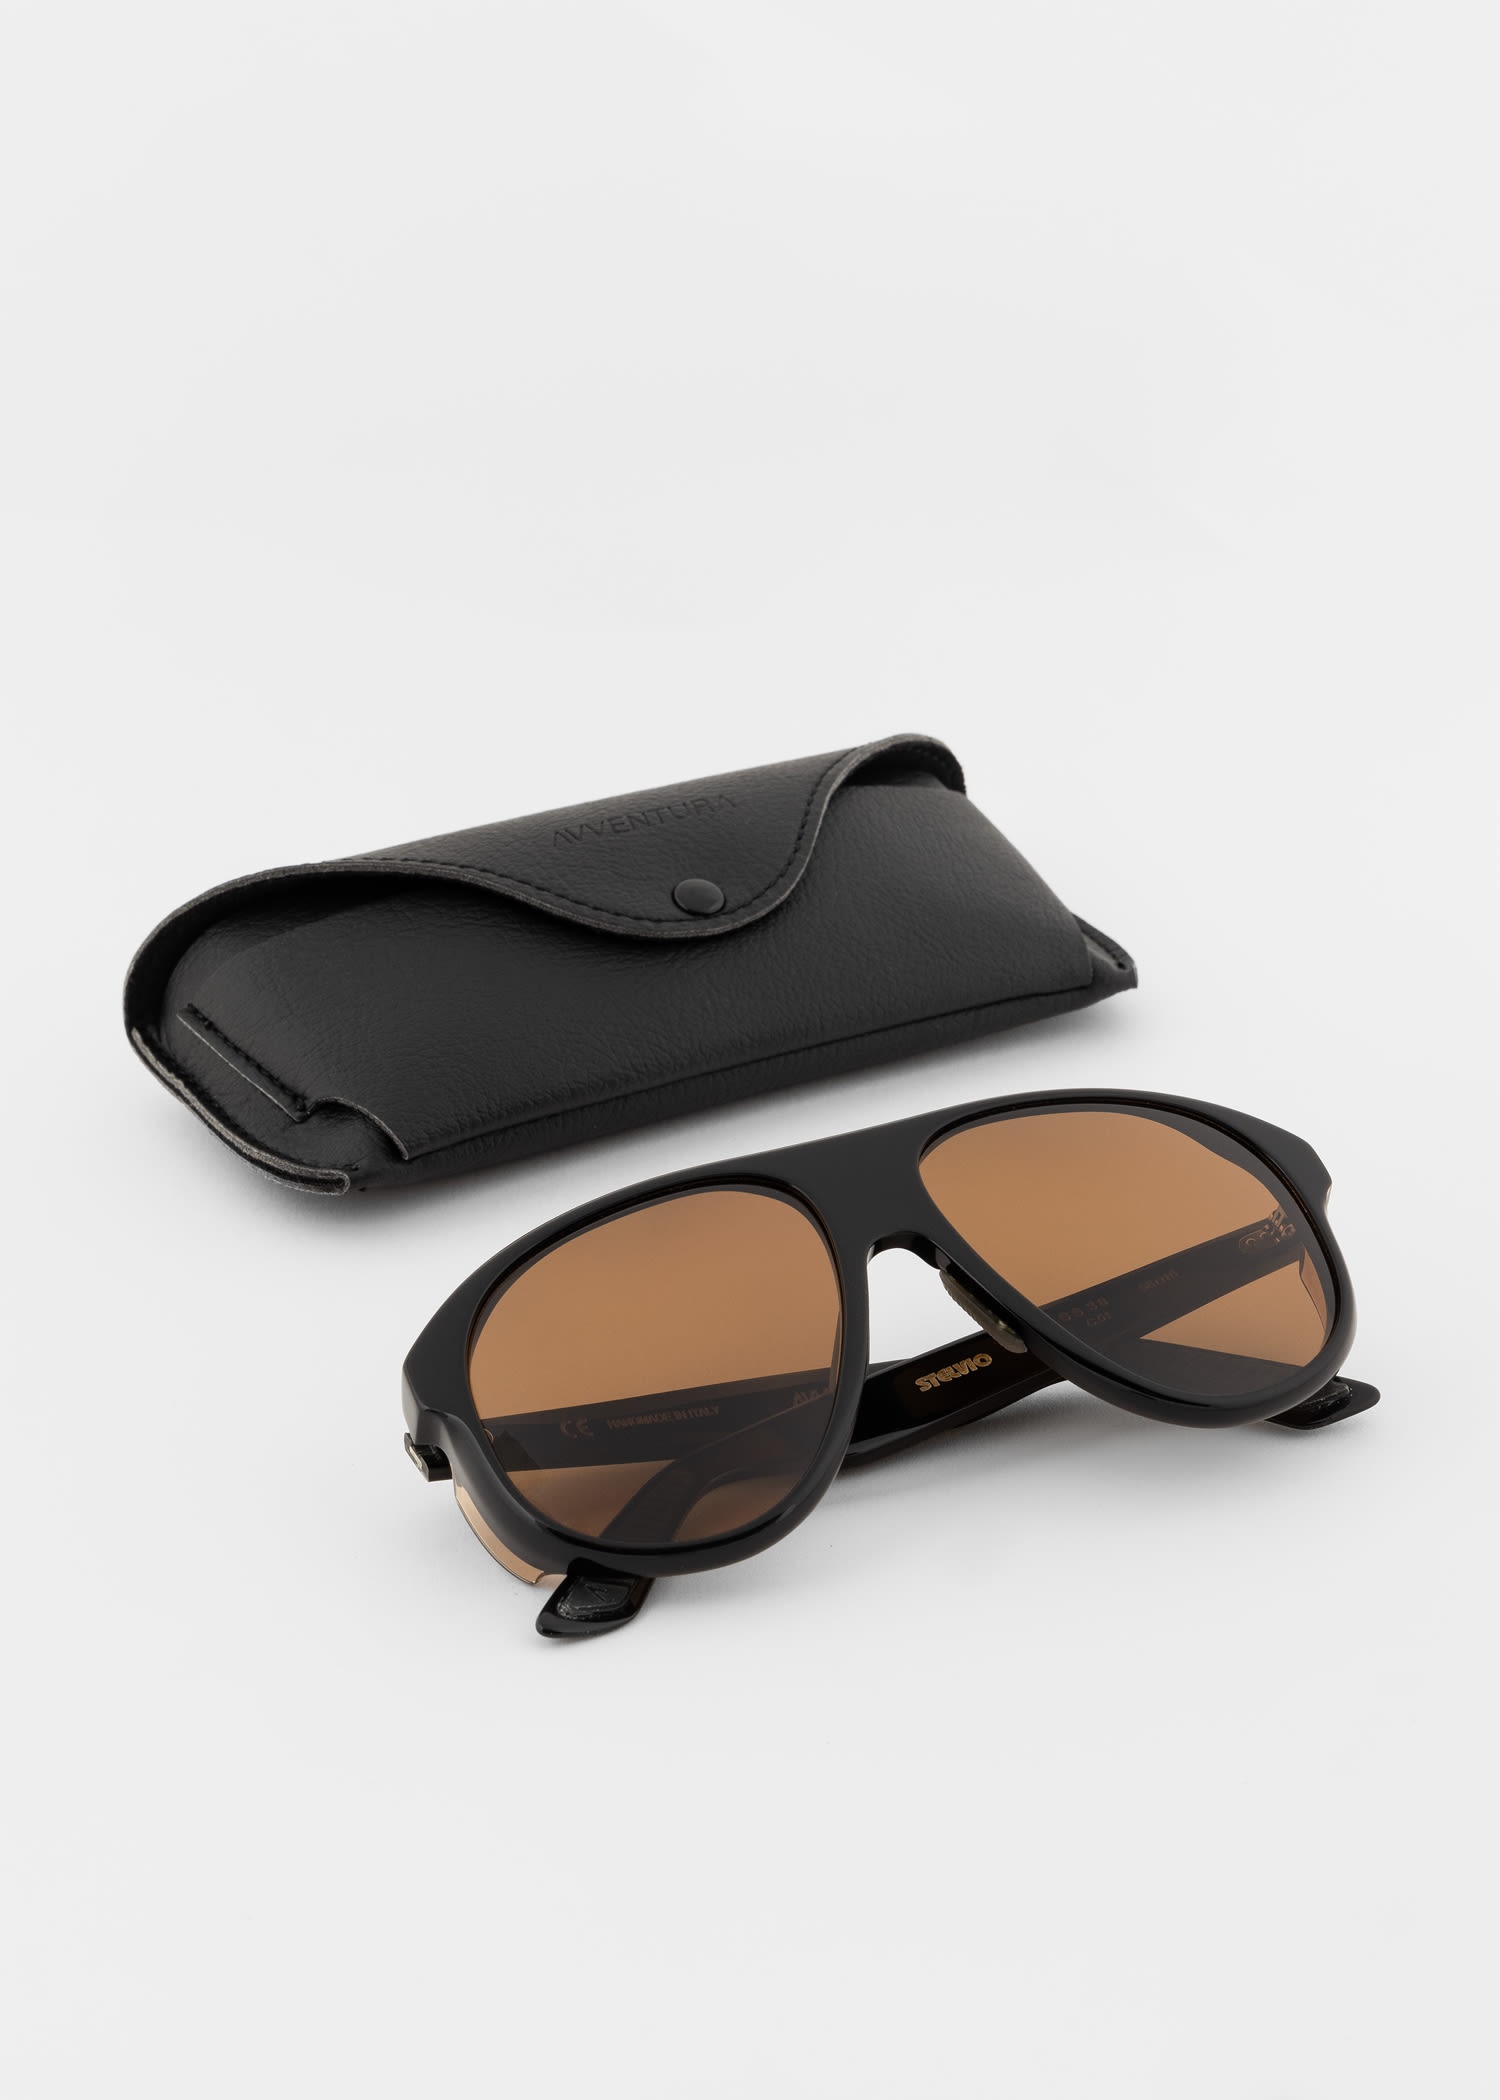 'Stelvio Noir' Sunglasses by Avventura - 5